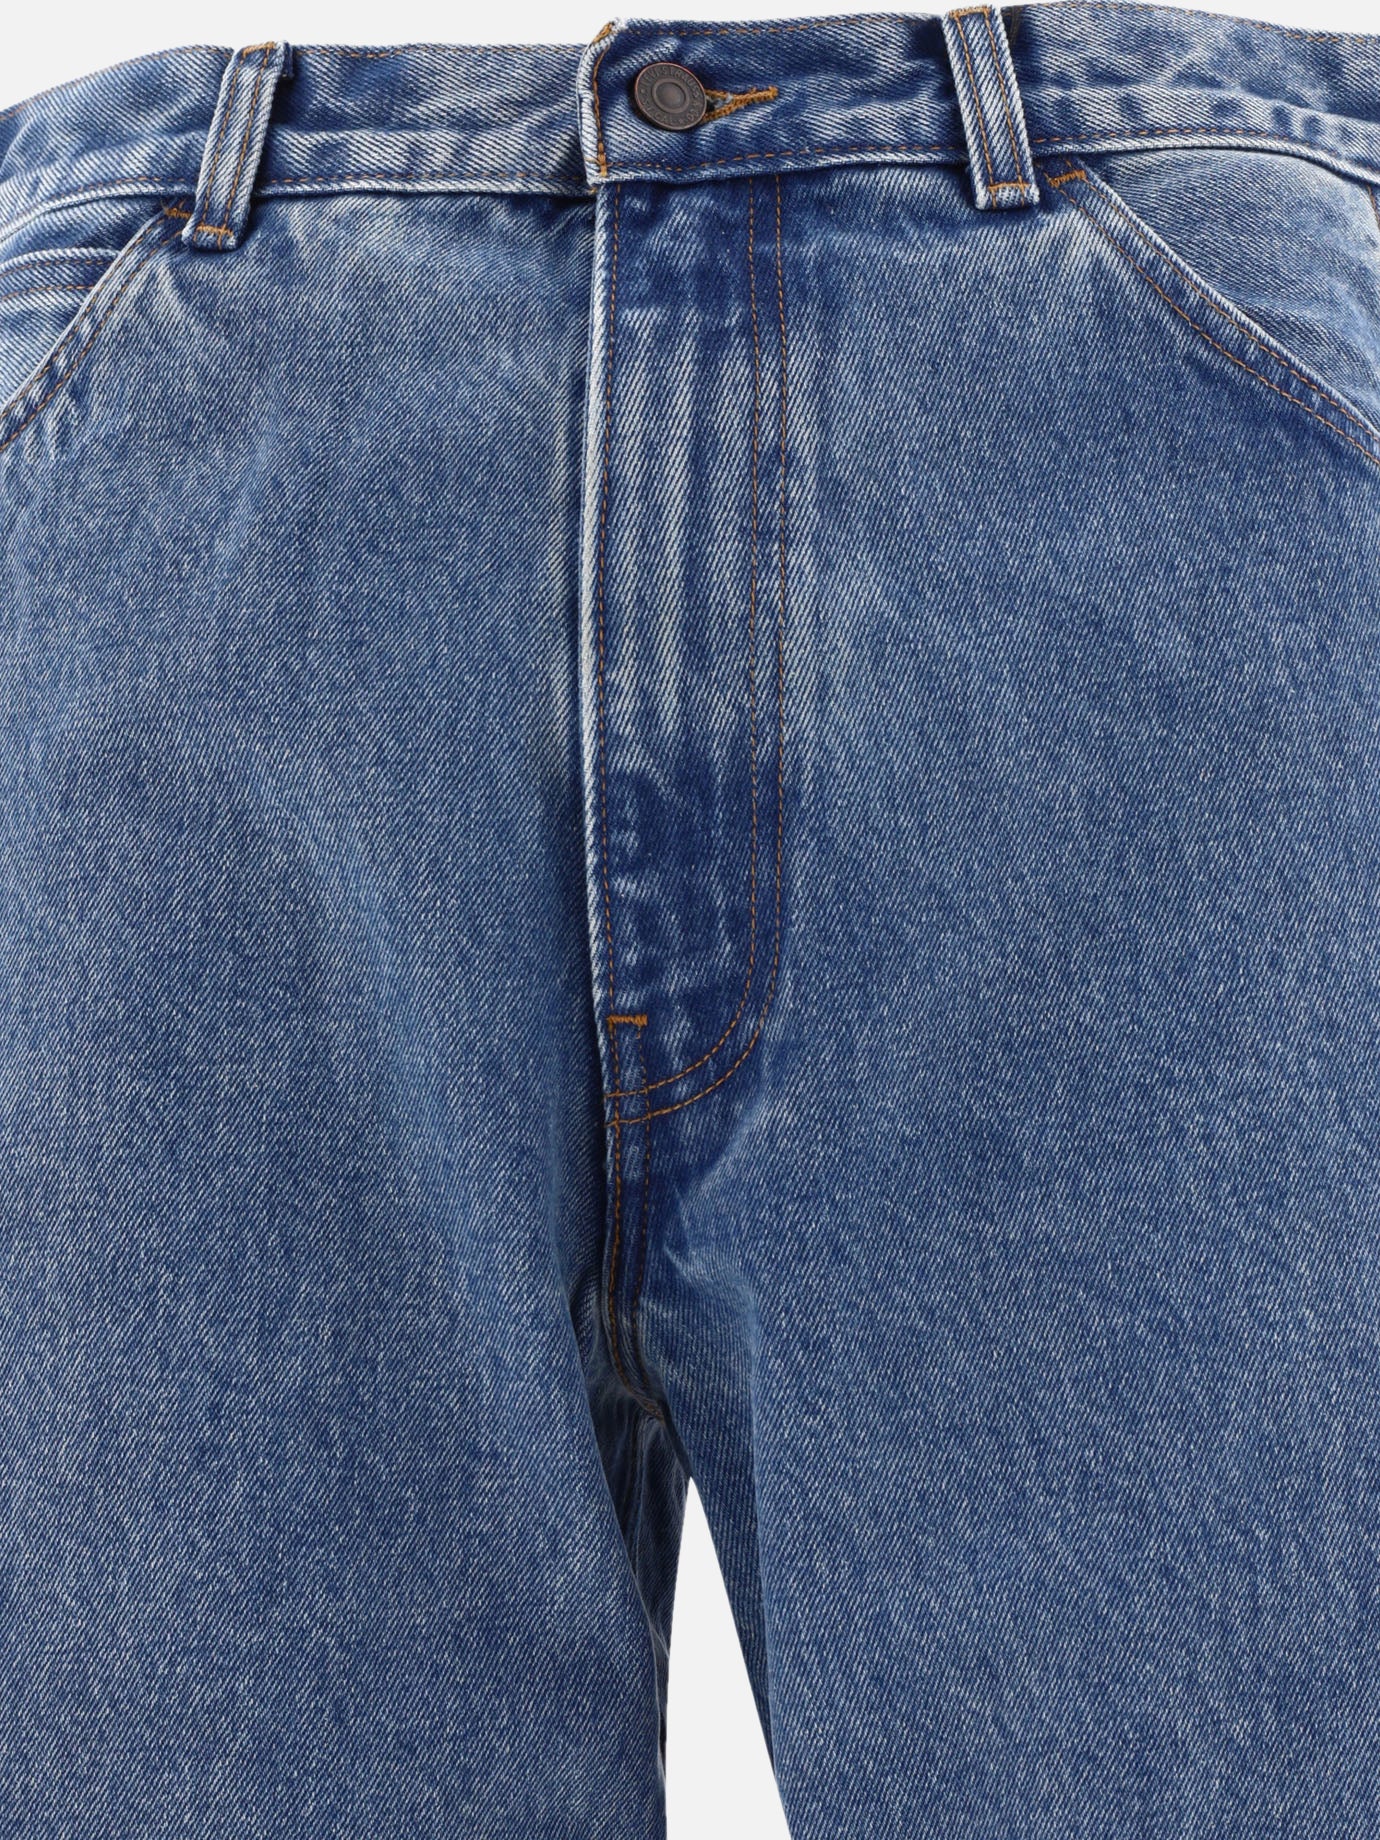 "Carpenter Crop" jeans